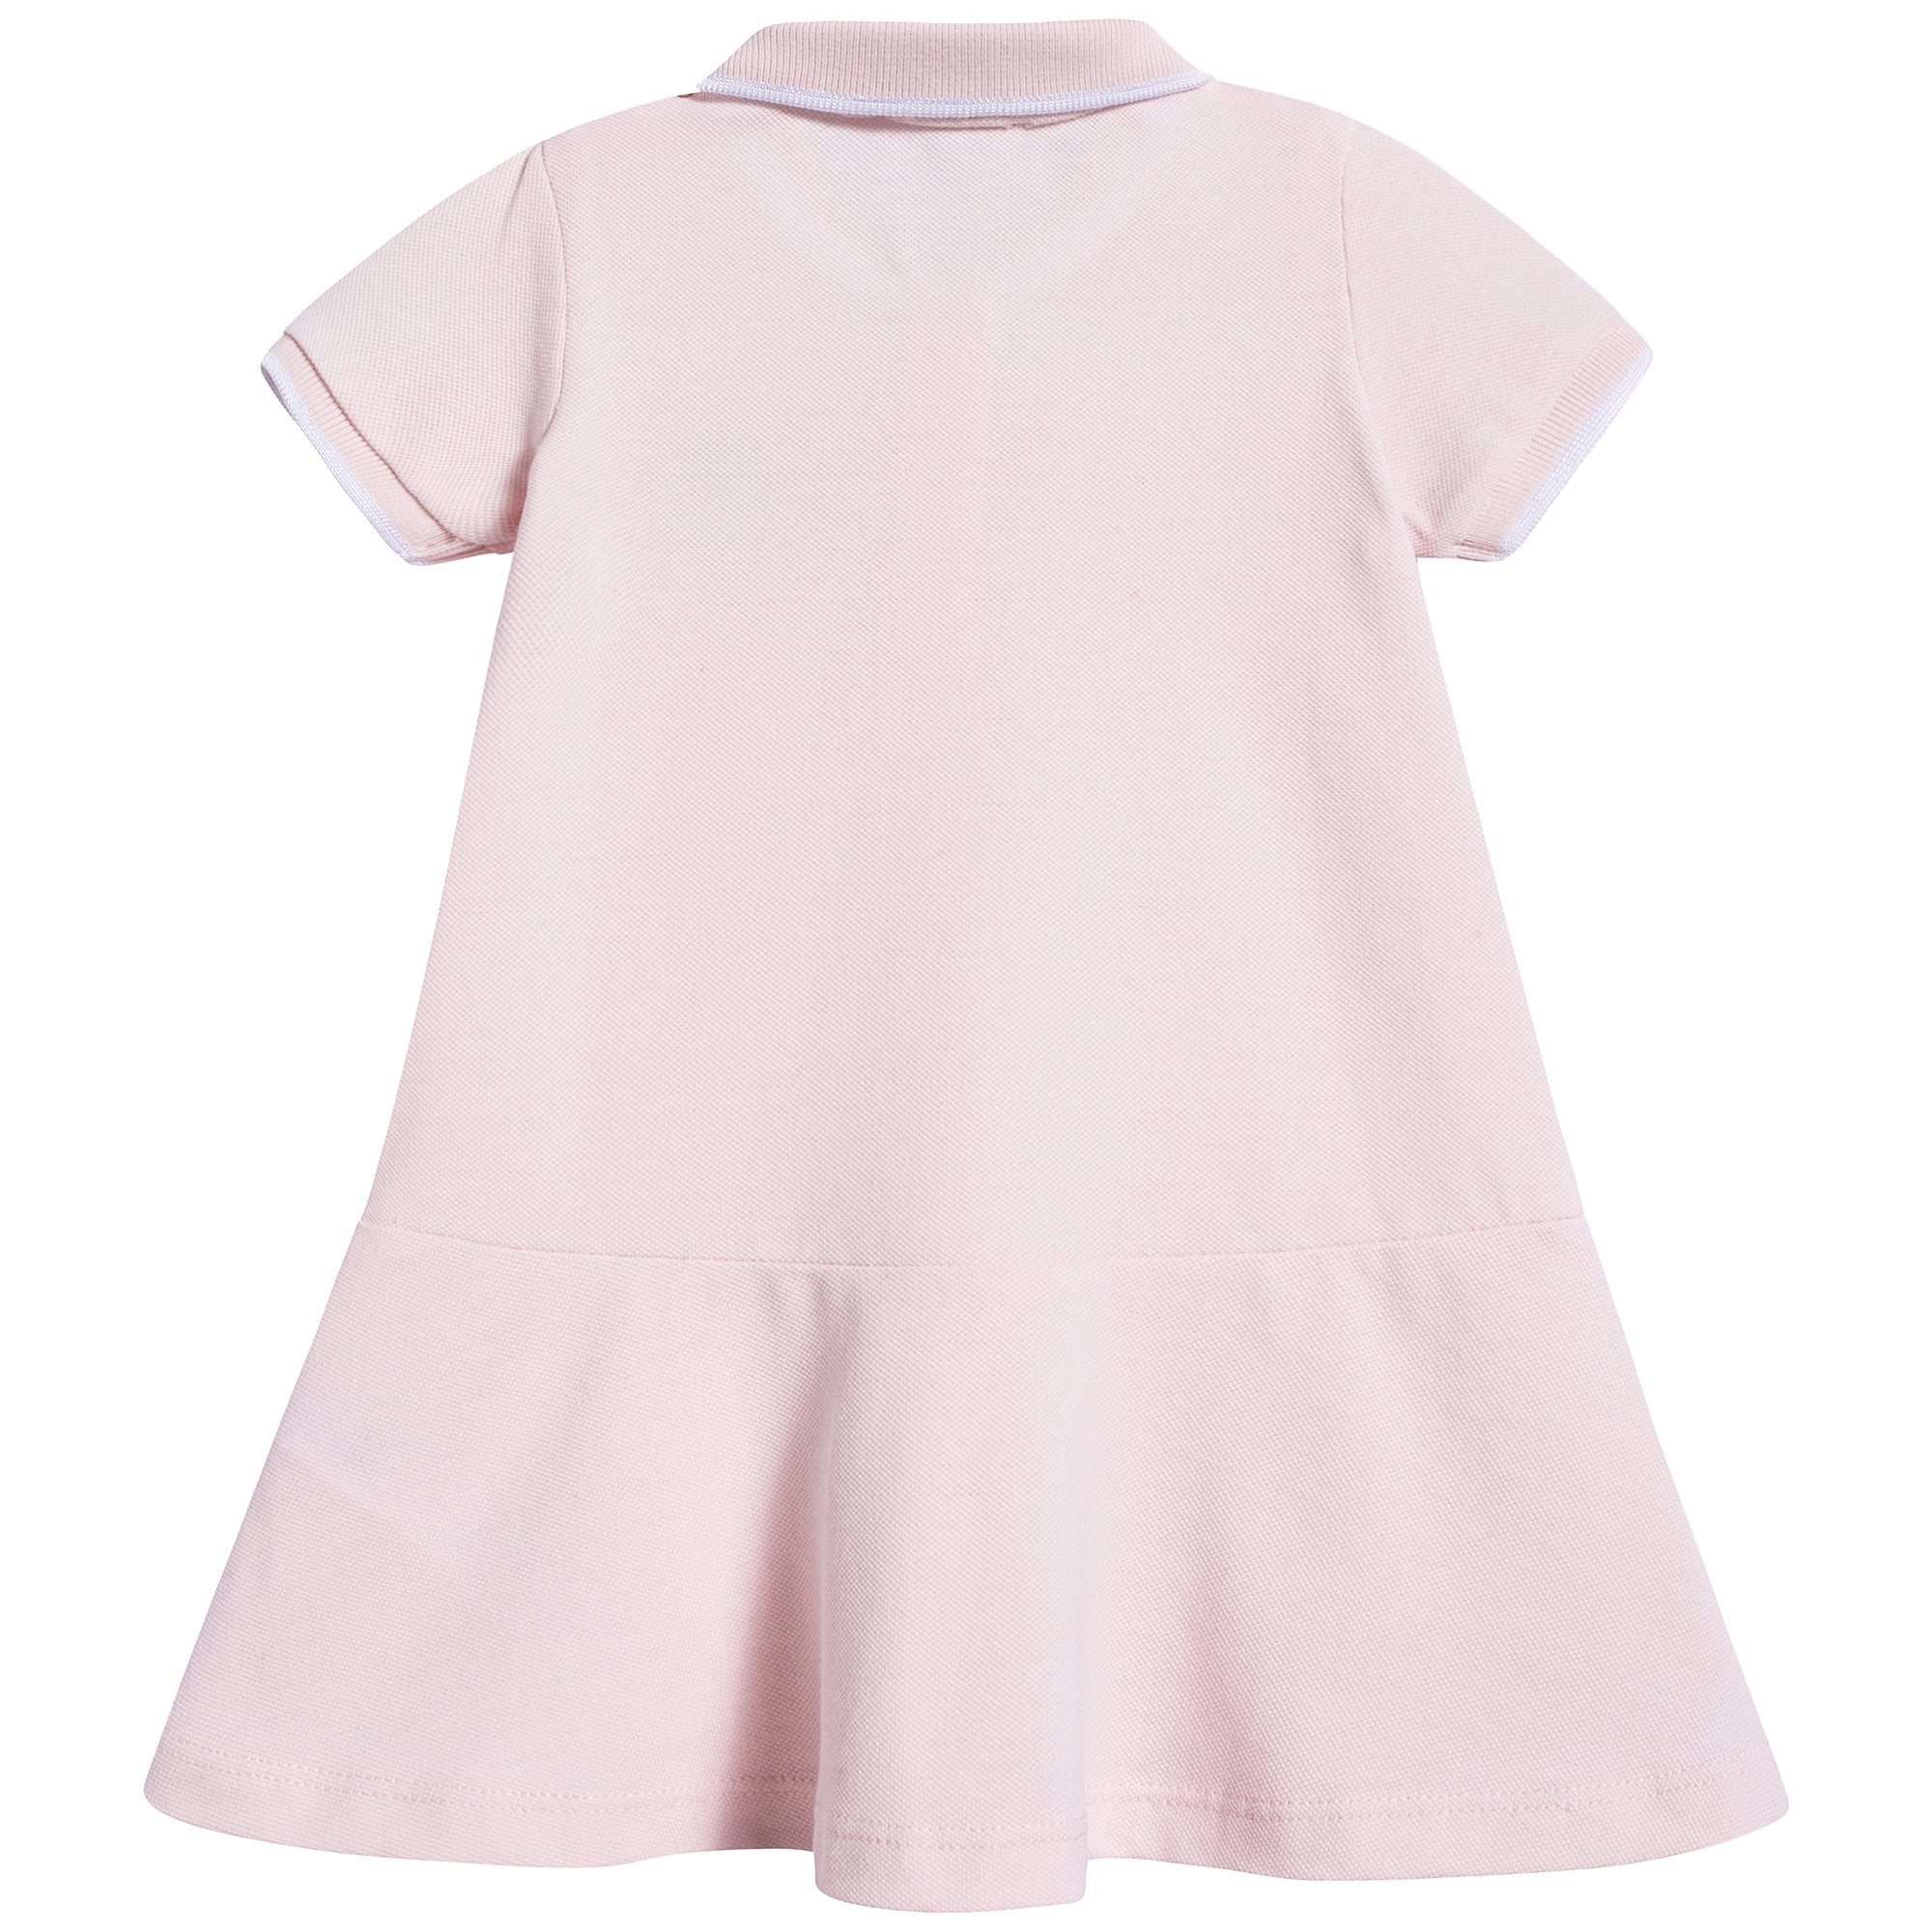 Baby Girls Light Pink Cotton Dress